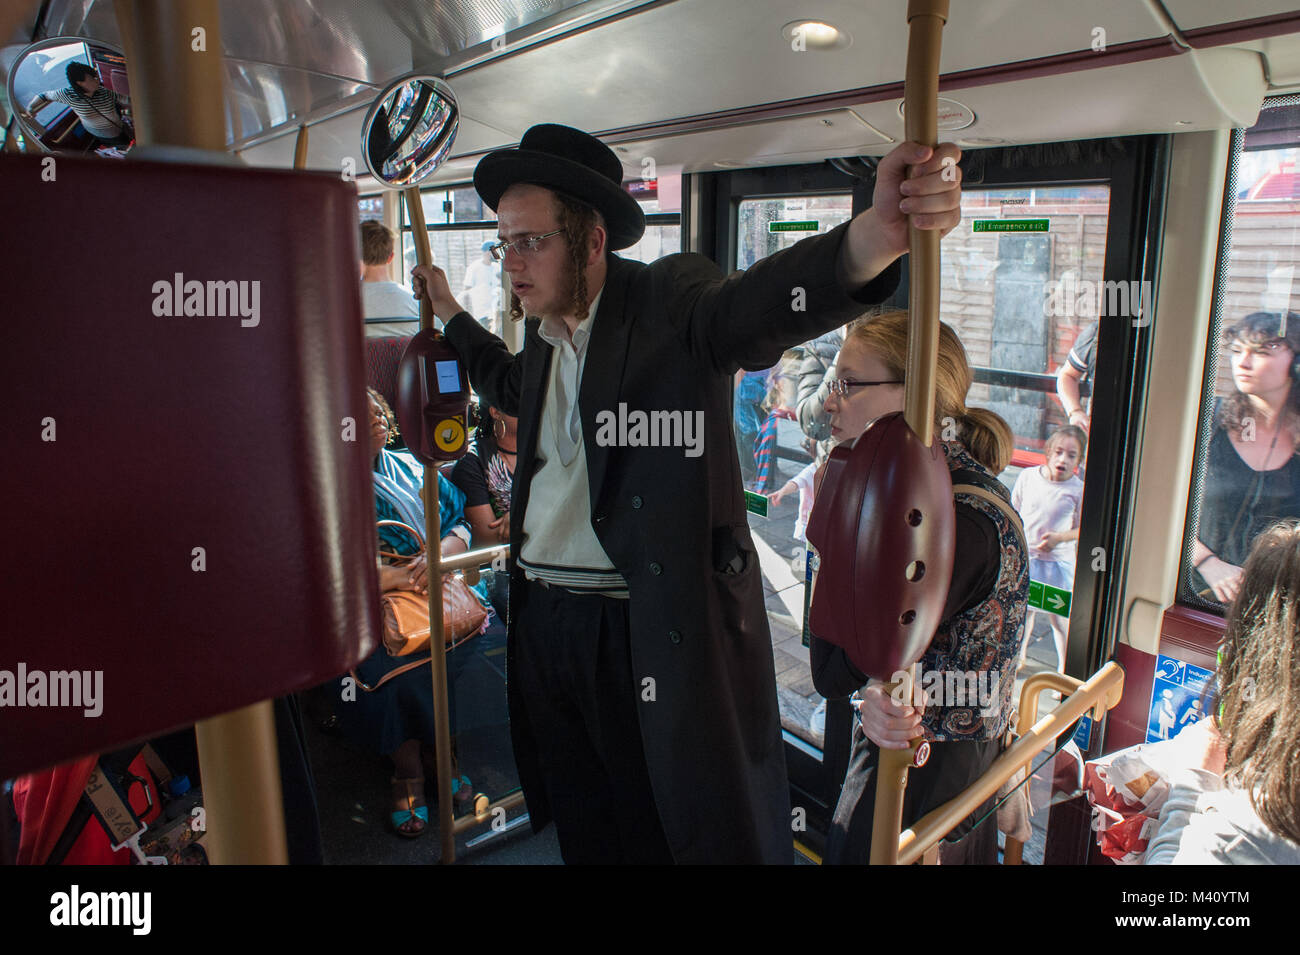 London, United Kingdom. Jewish family in a bus. Stock Photo